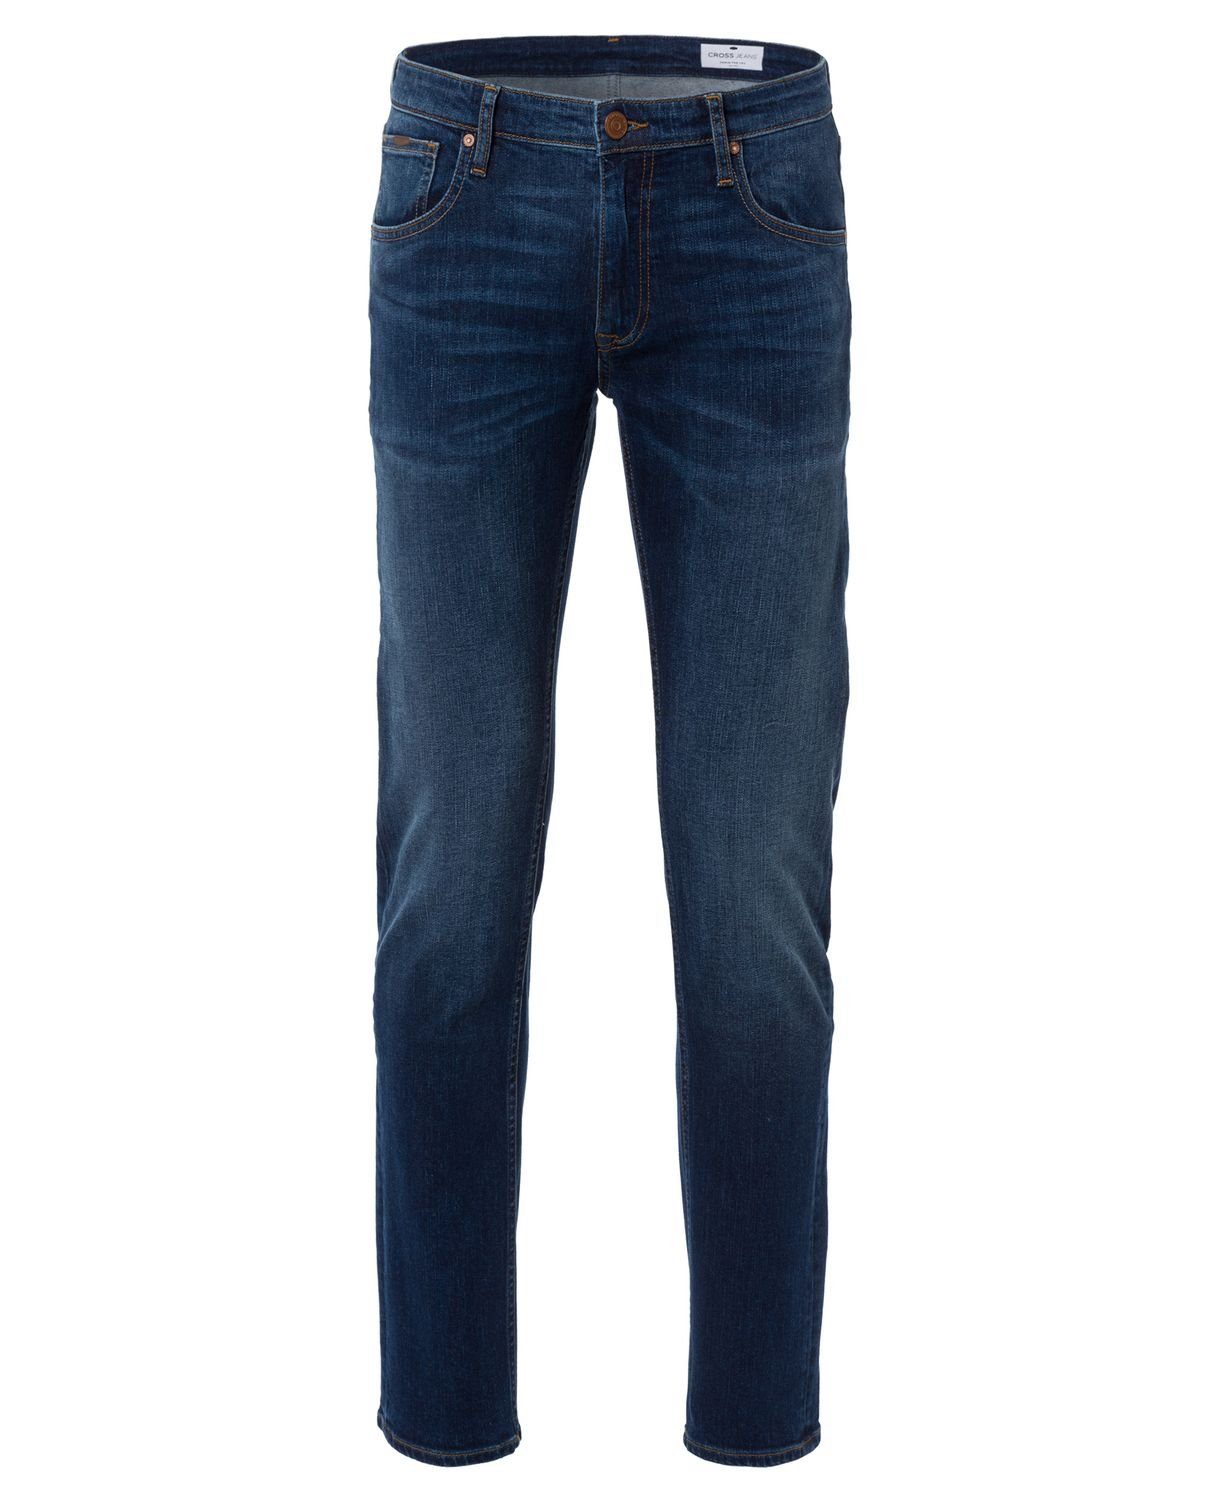 Damien Jeanshose JEANS® CROSS Stretch mit Slim-fit-Jeans